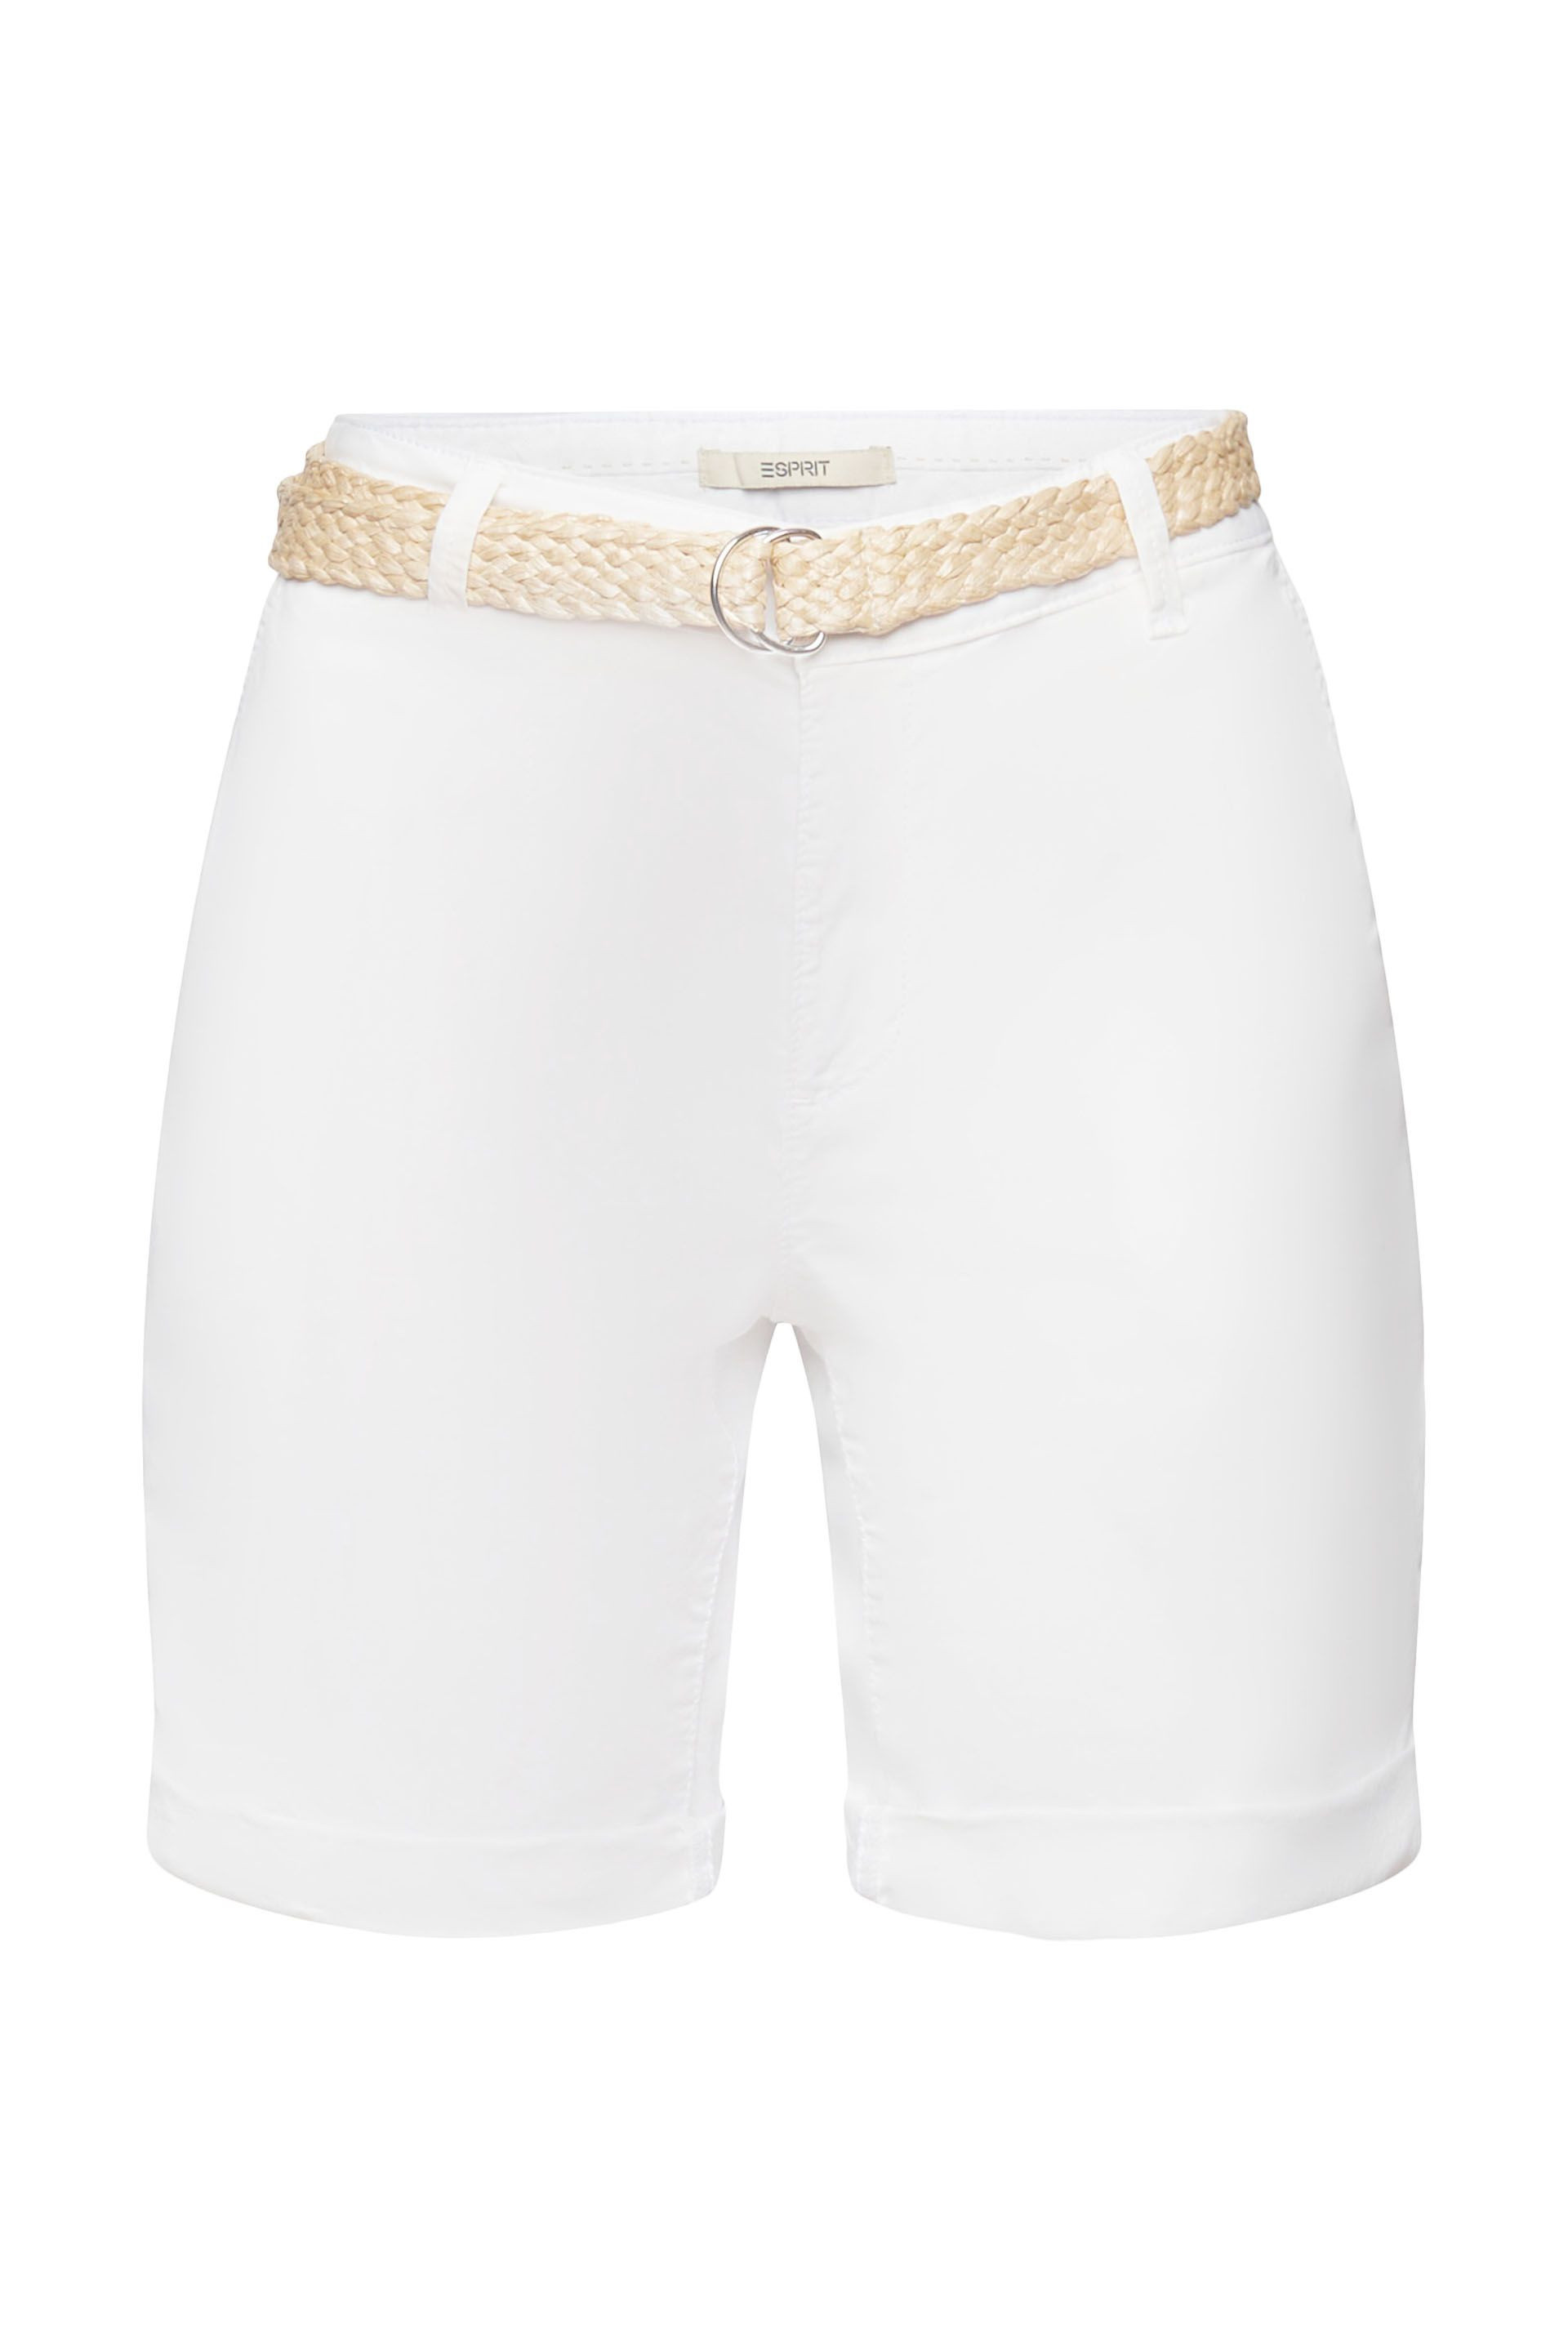 Esprit - Shorts with braided raffia belt, White, large image number 0